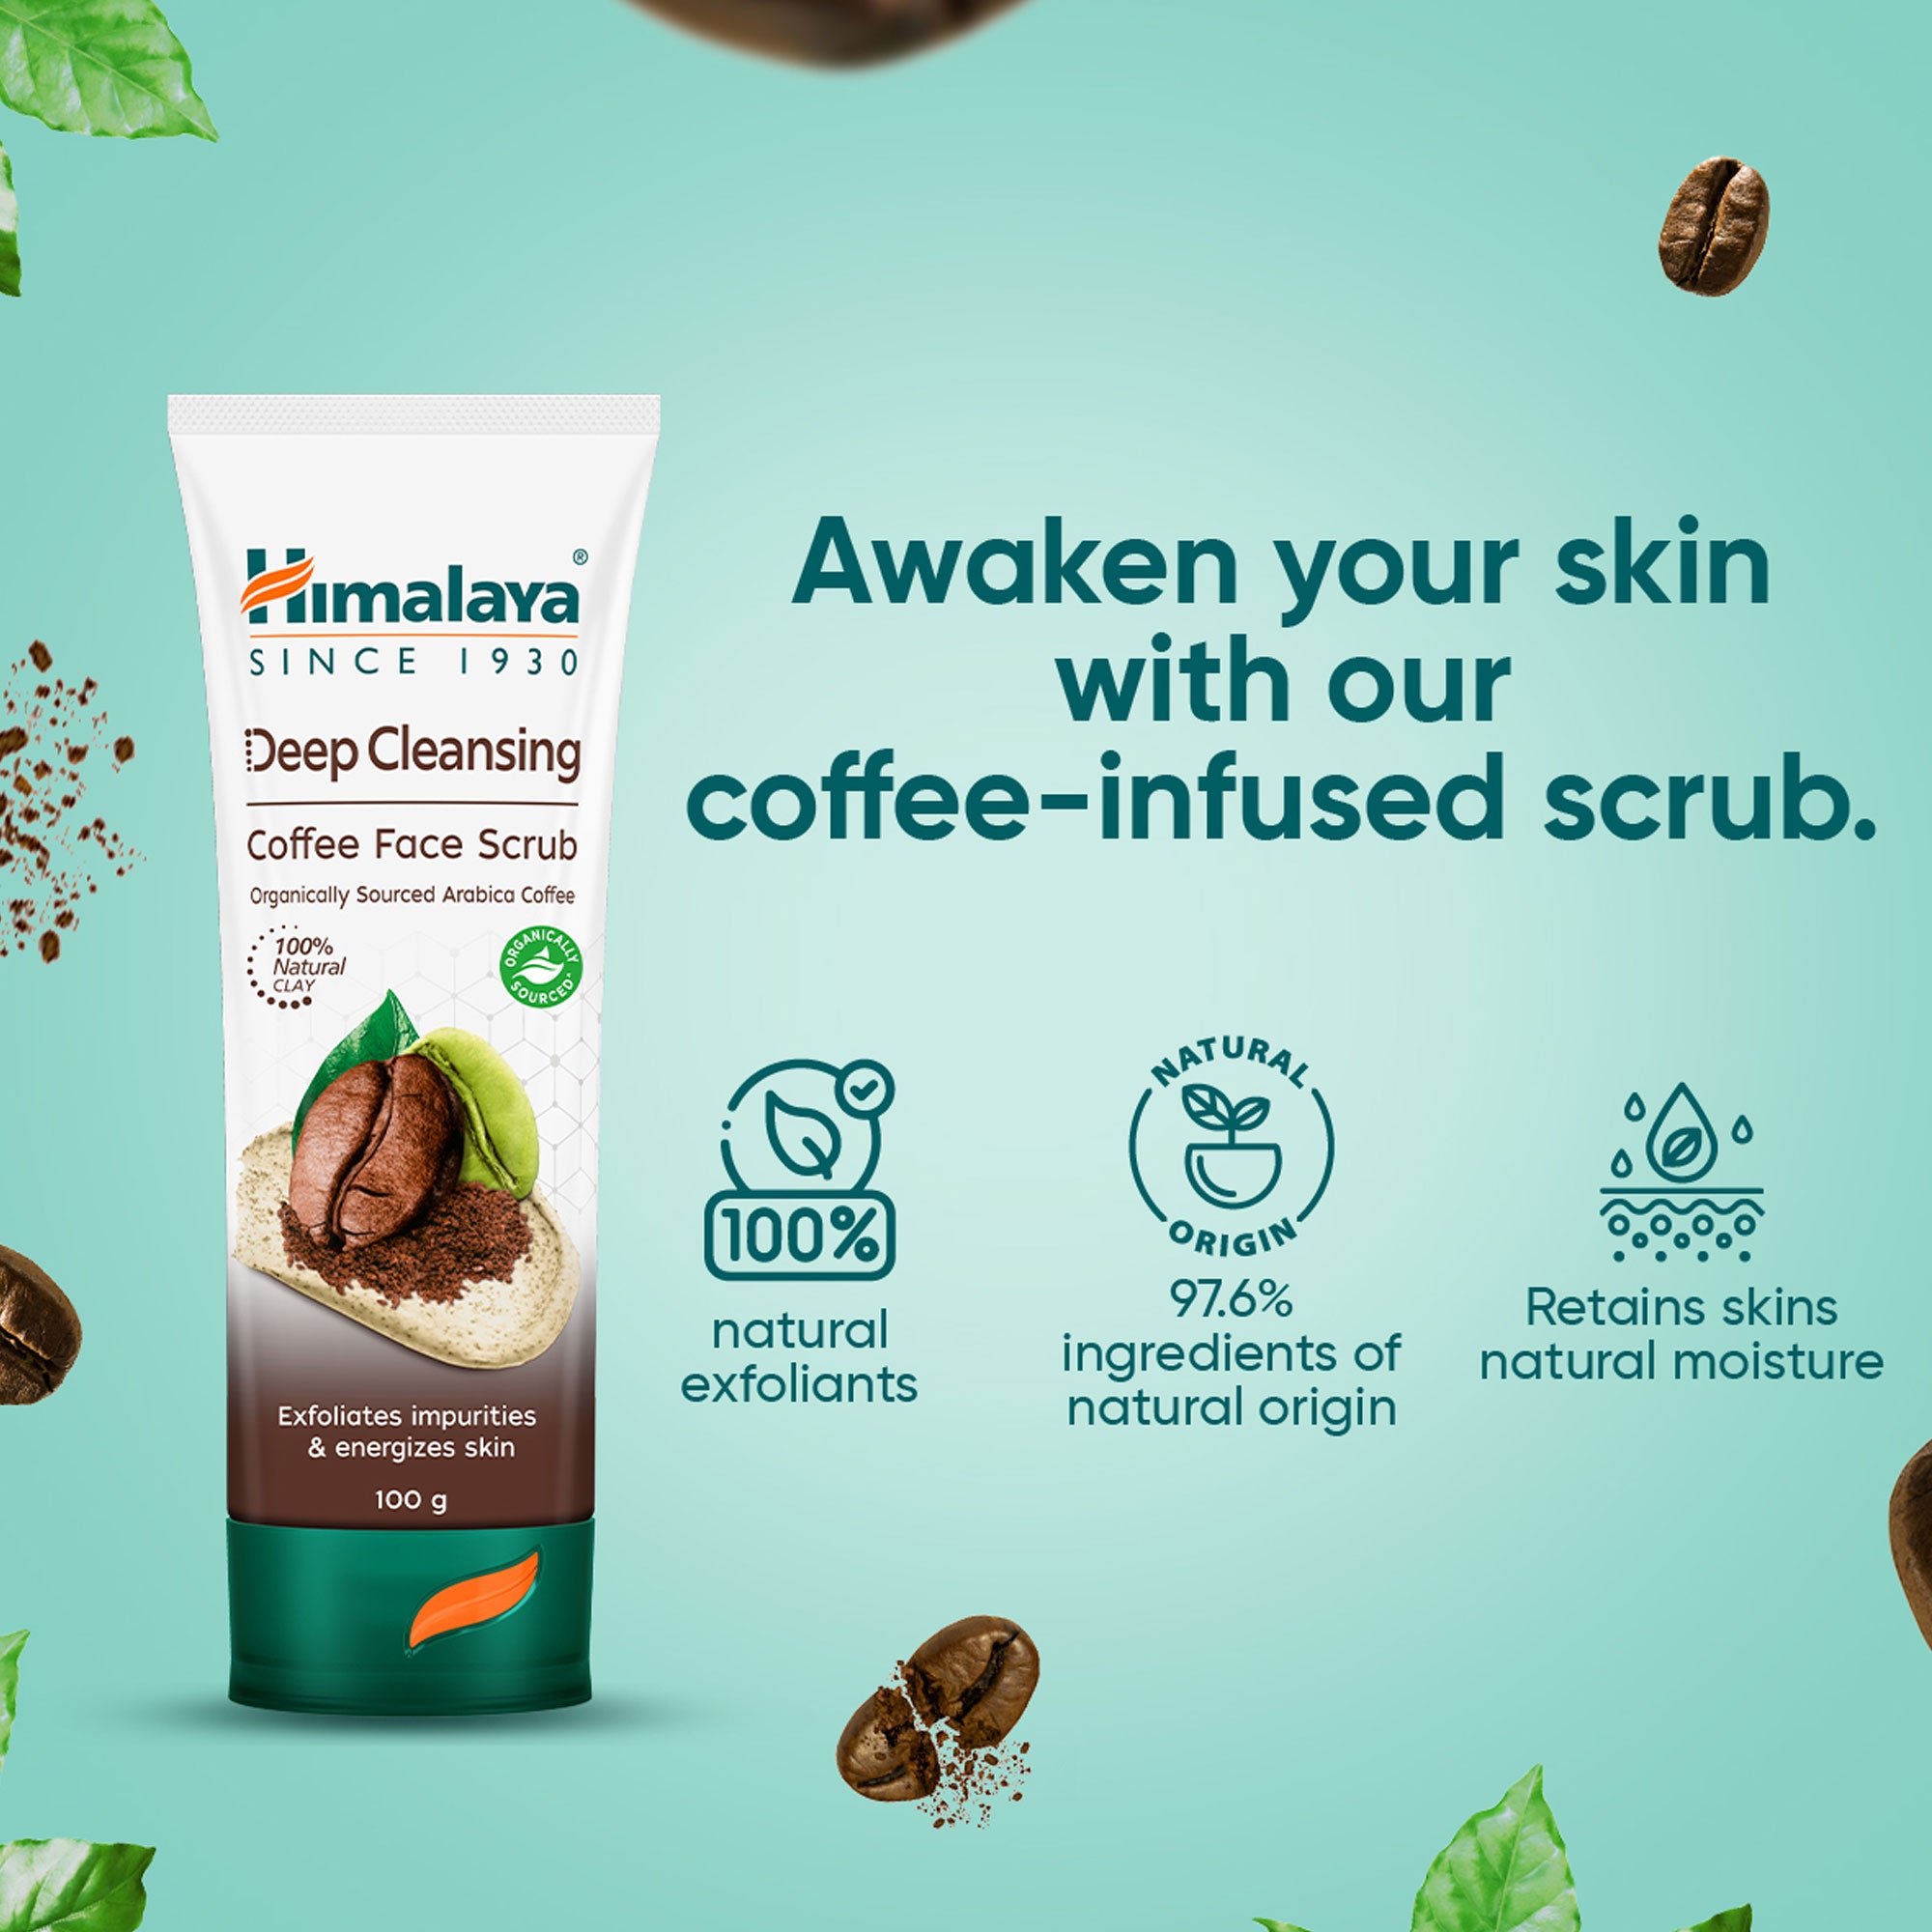 Himalaya Deep Cleansing Coffee Face Scrub 100g - 100% natural exfoliants